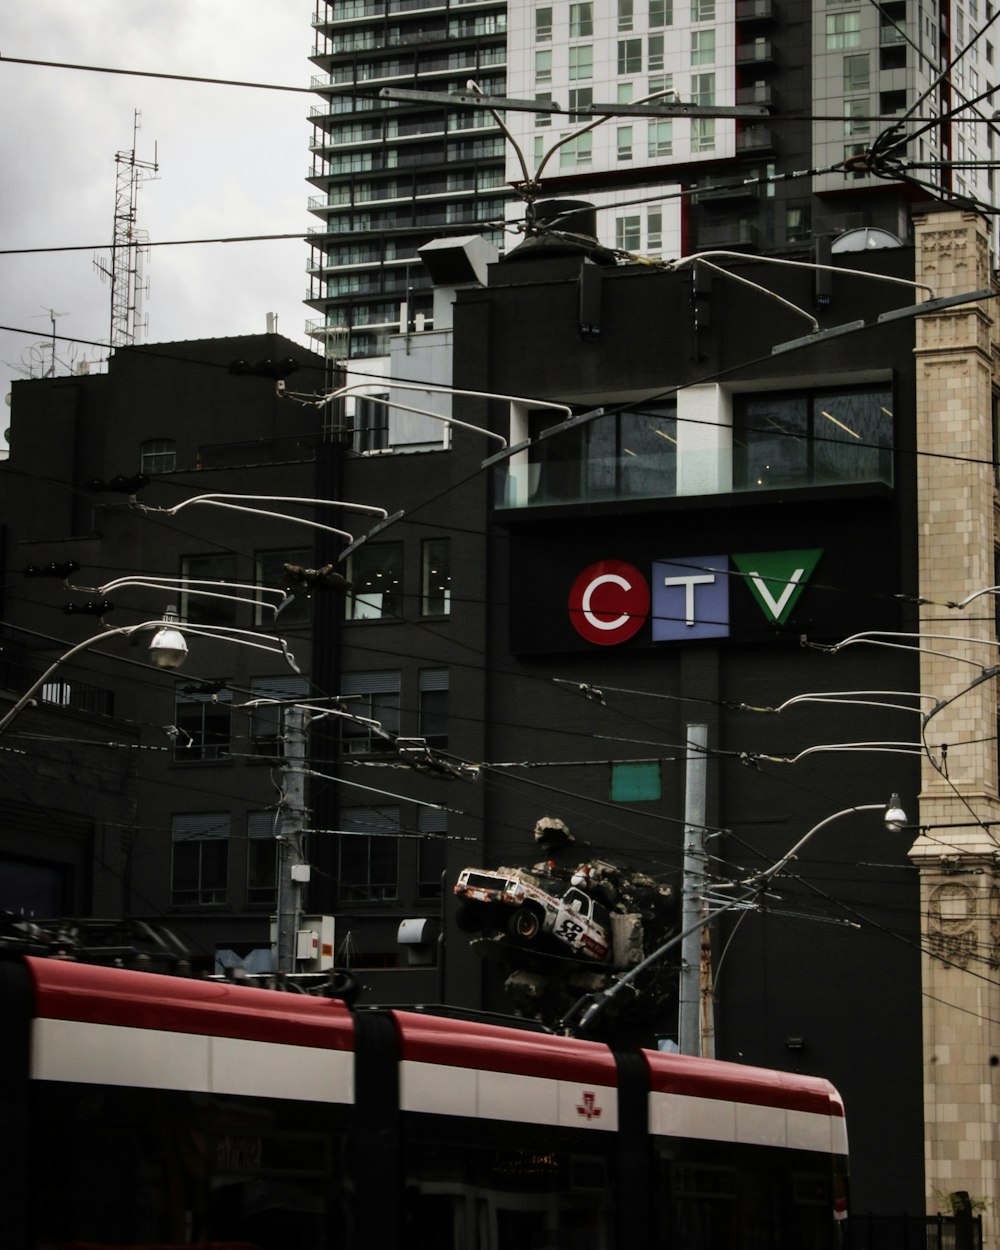 black CTV building near train